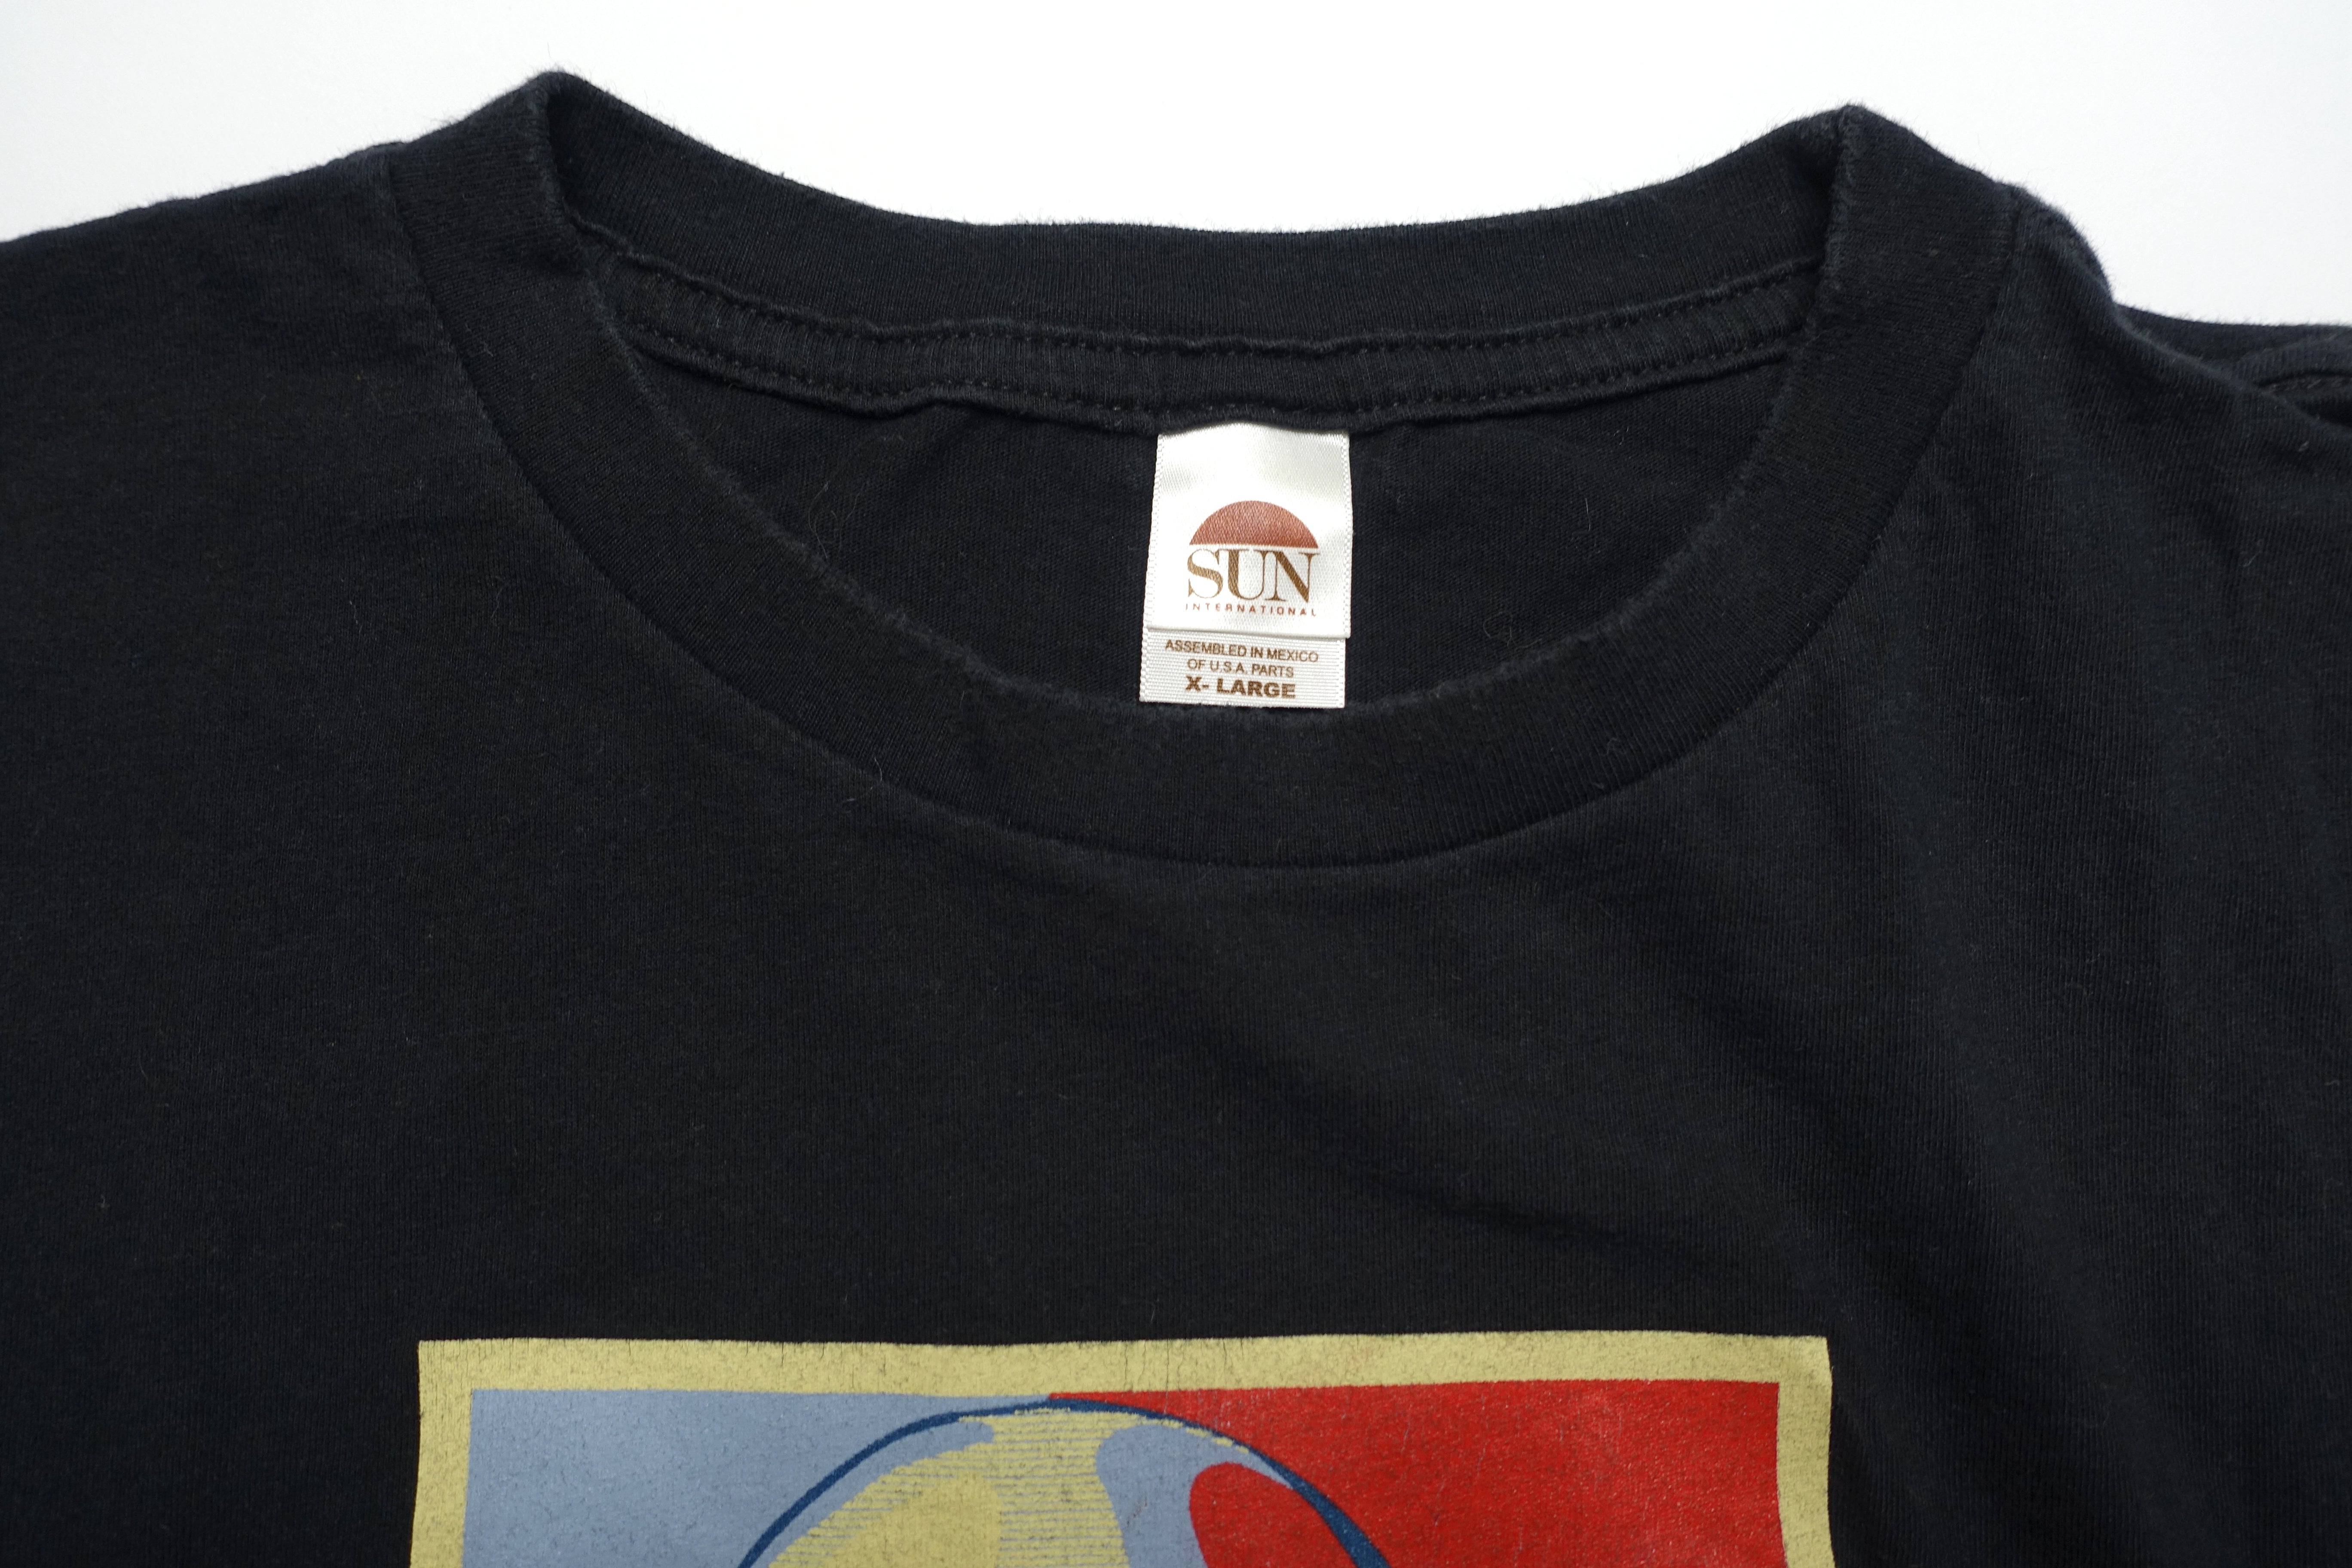 NOFX - Kent For President Tour Shirt Size XL